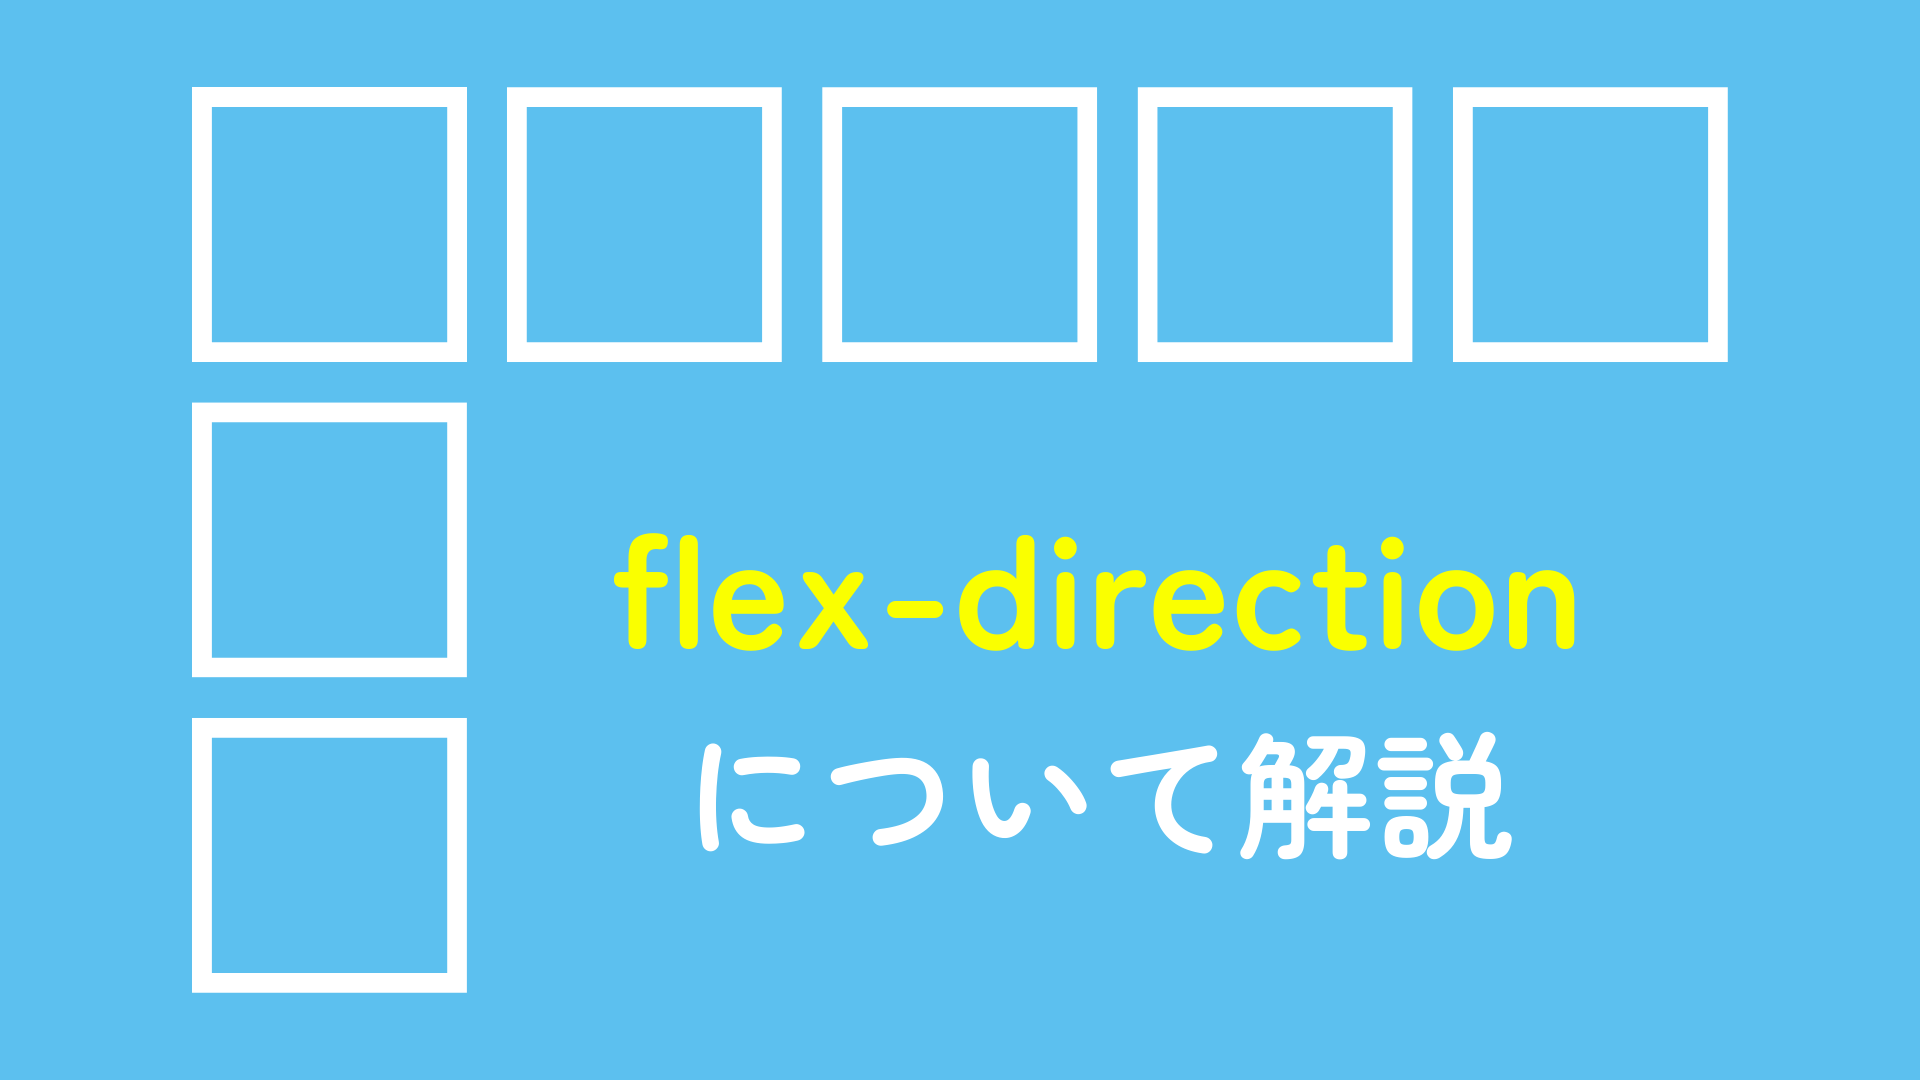 flex-directionについて解説